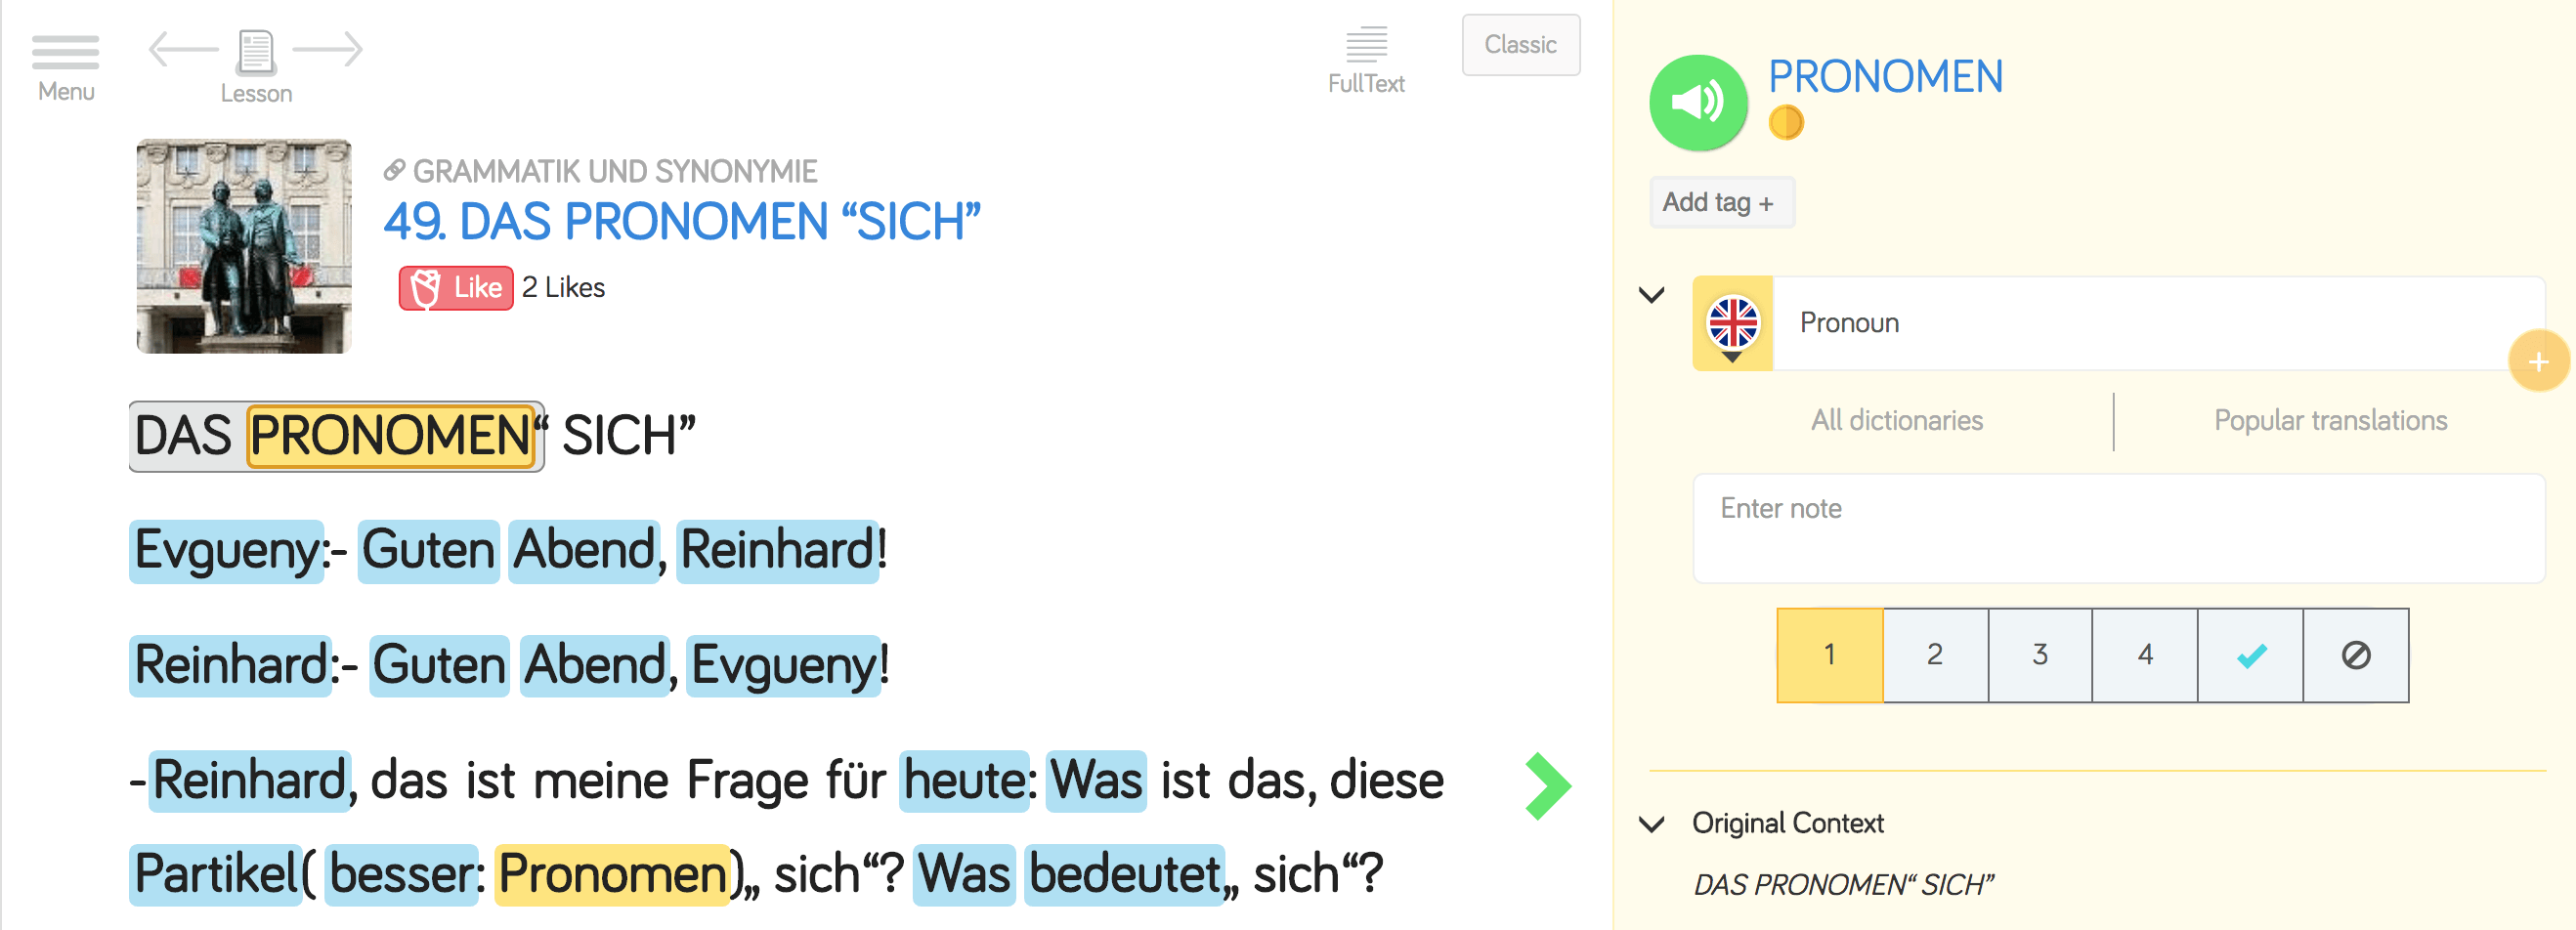 Learn German pronouns on LingQ